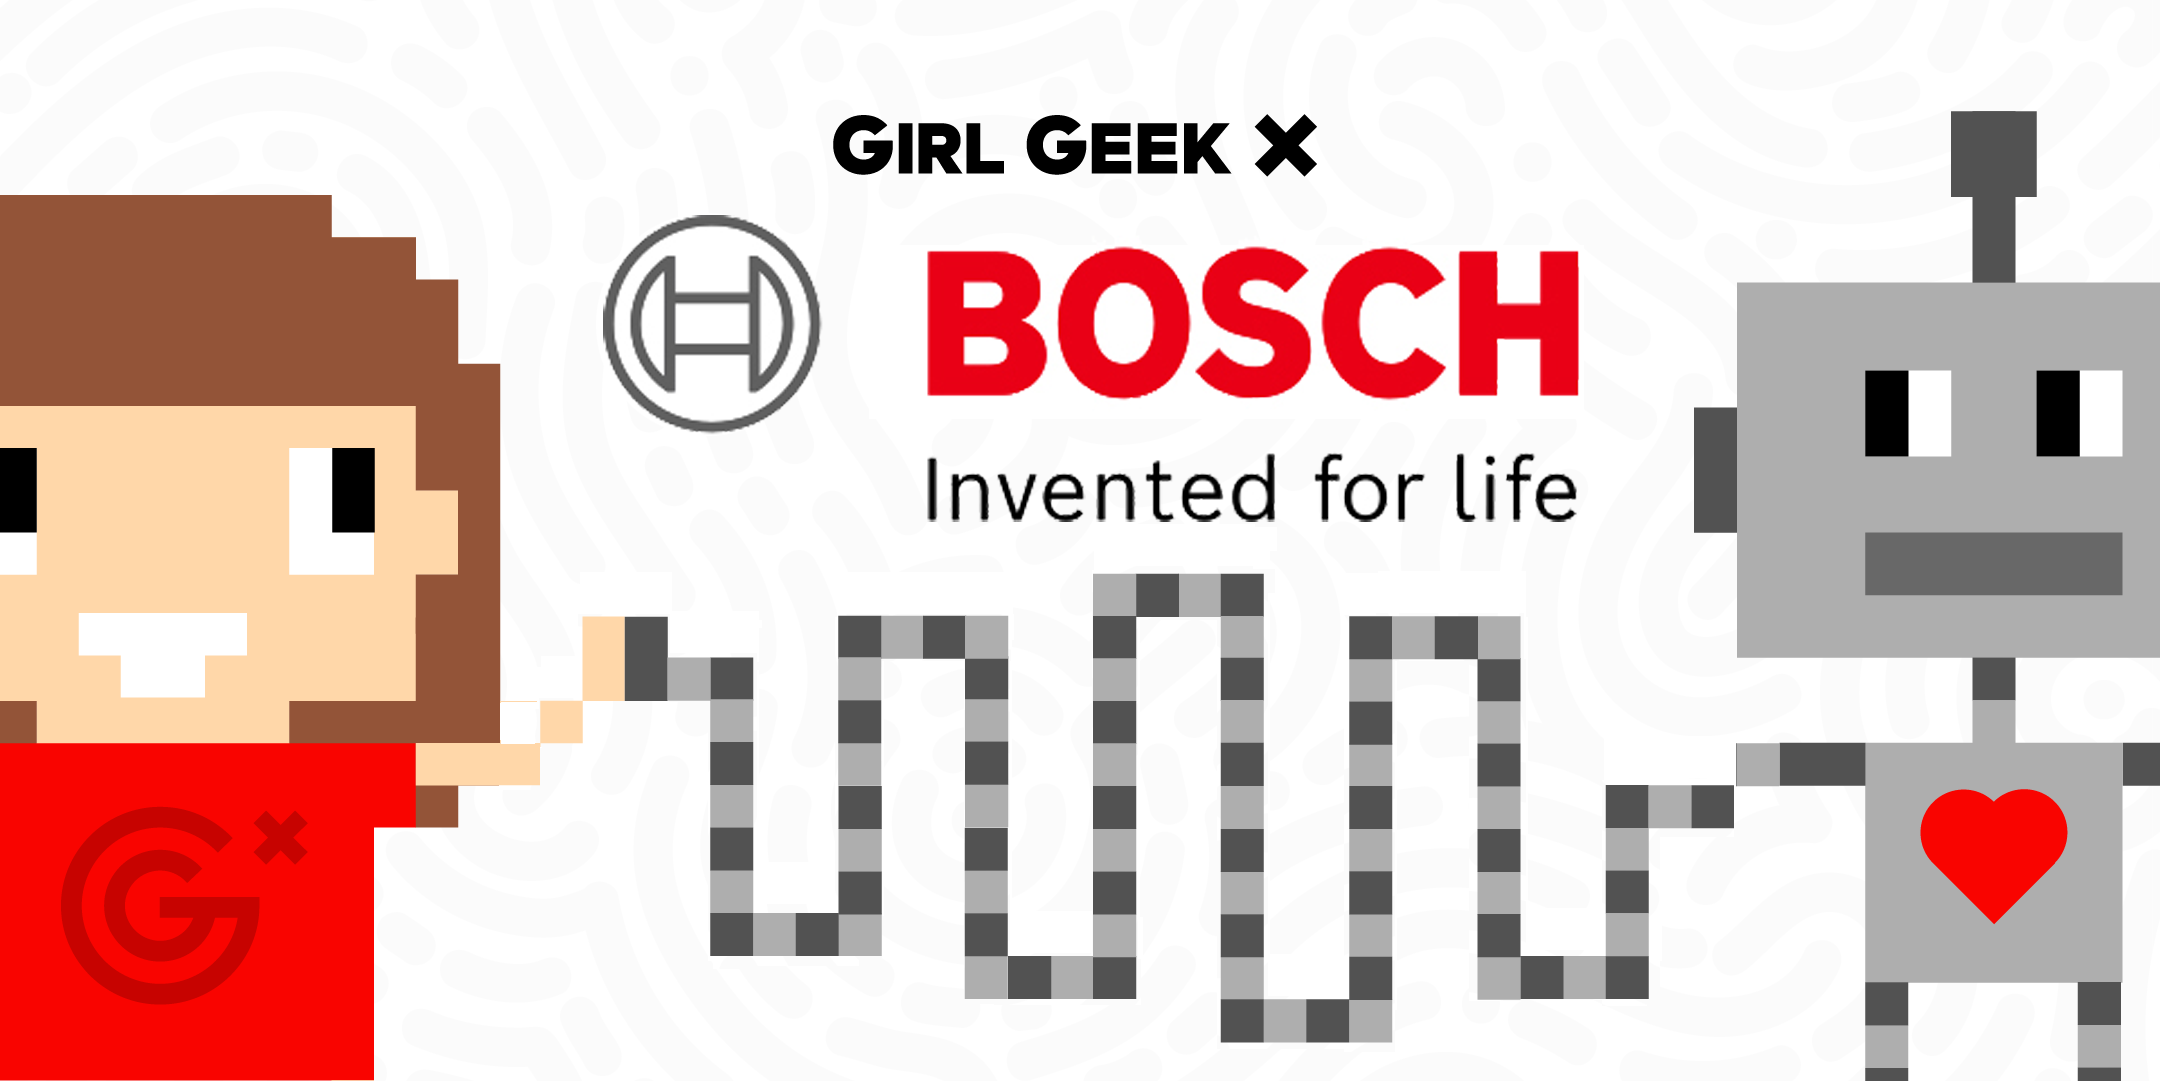 Bosch Girl Geek Dinner 2019 Girl Geek X Connecting Forward